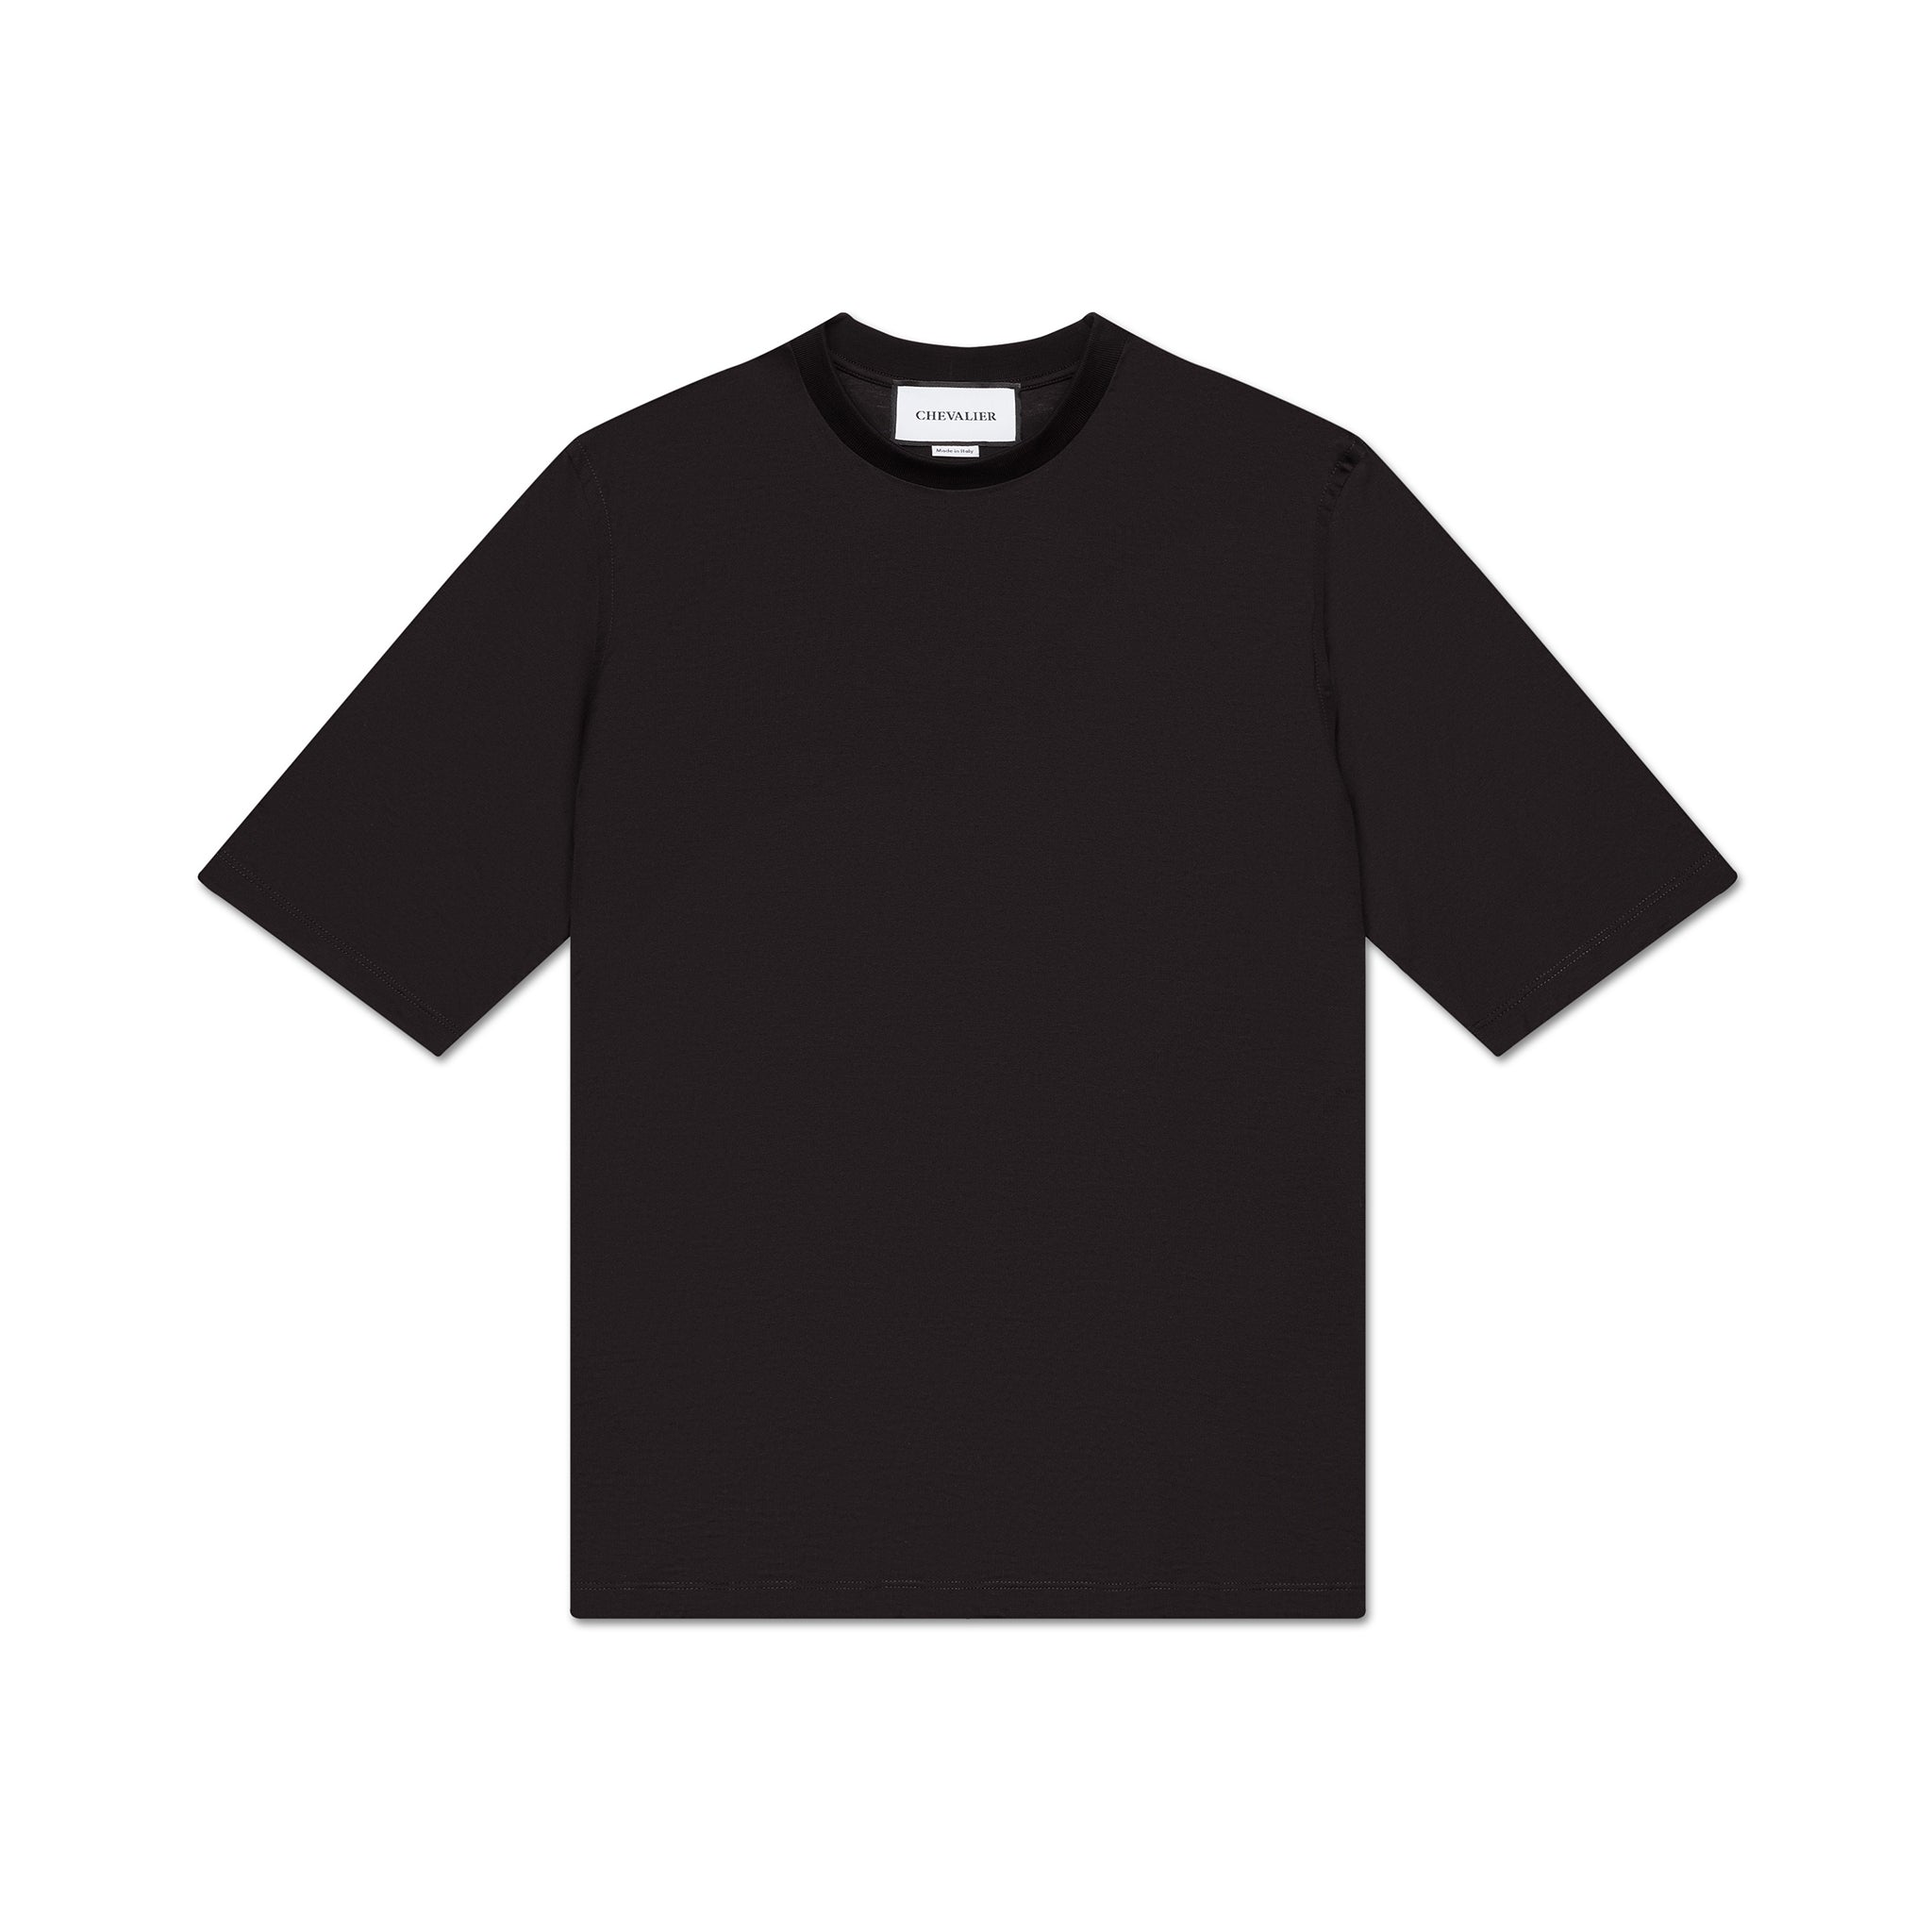 Black Short-Sleeved Jersey T-Shirt